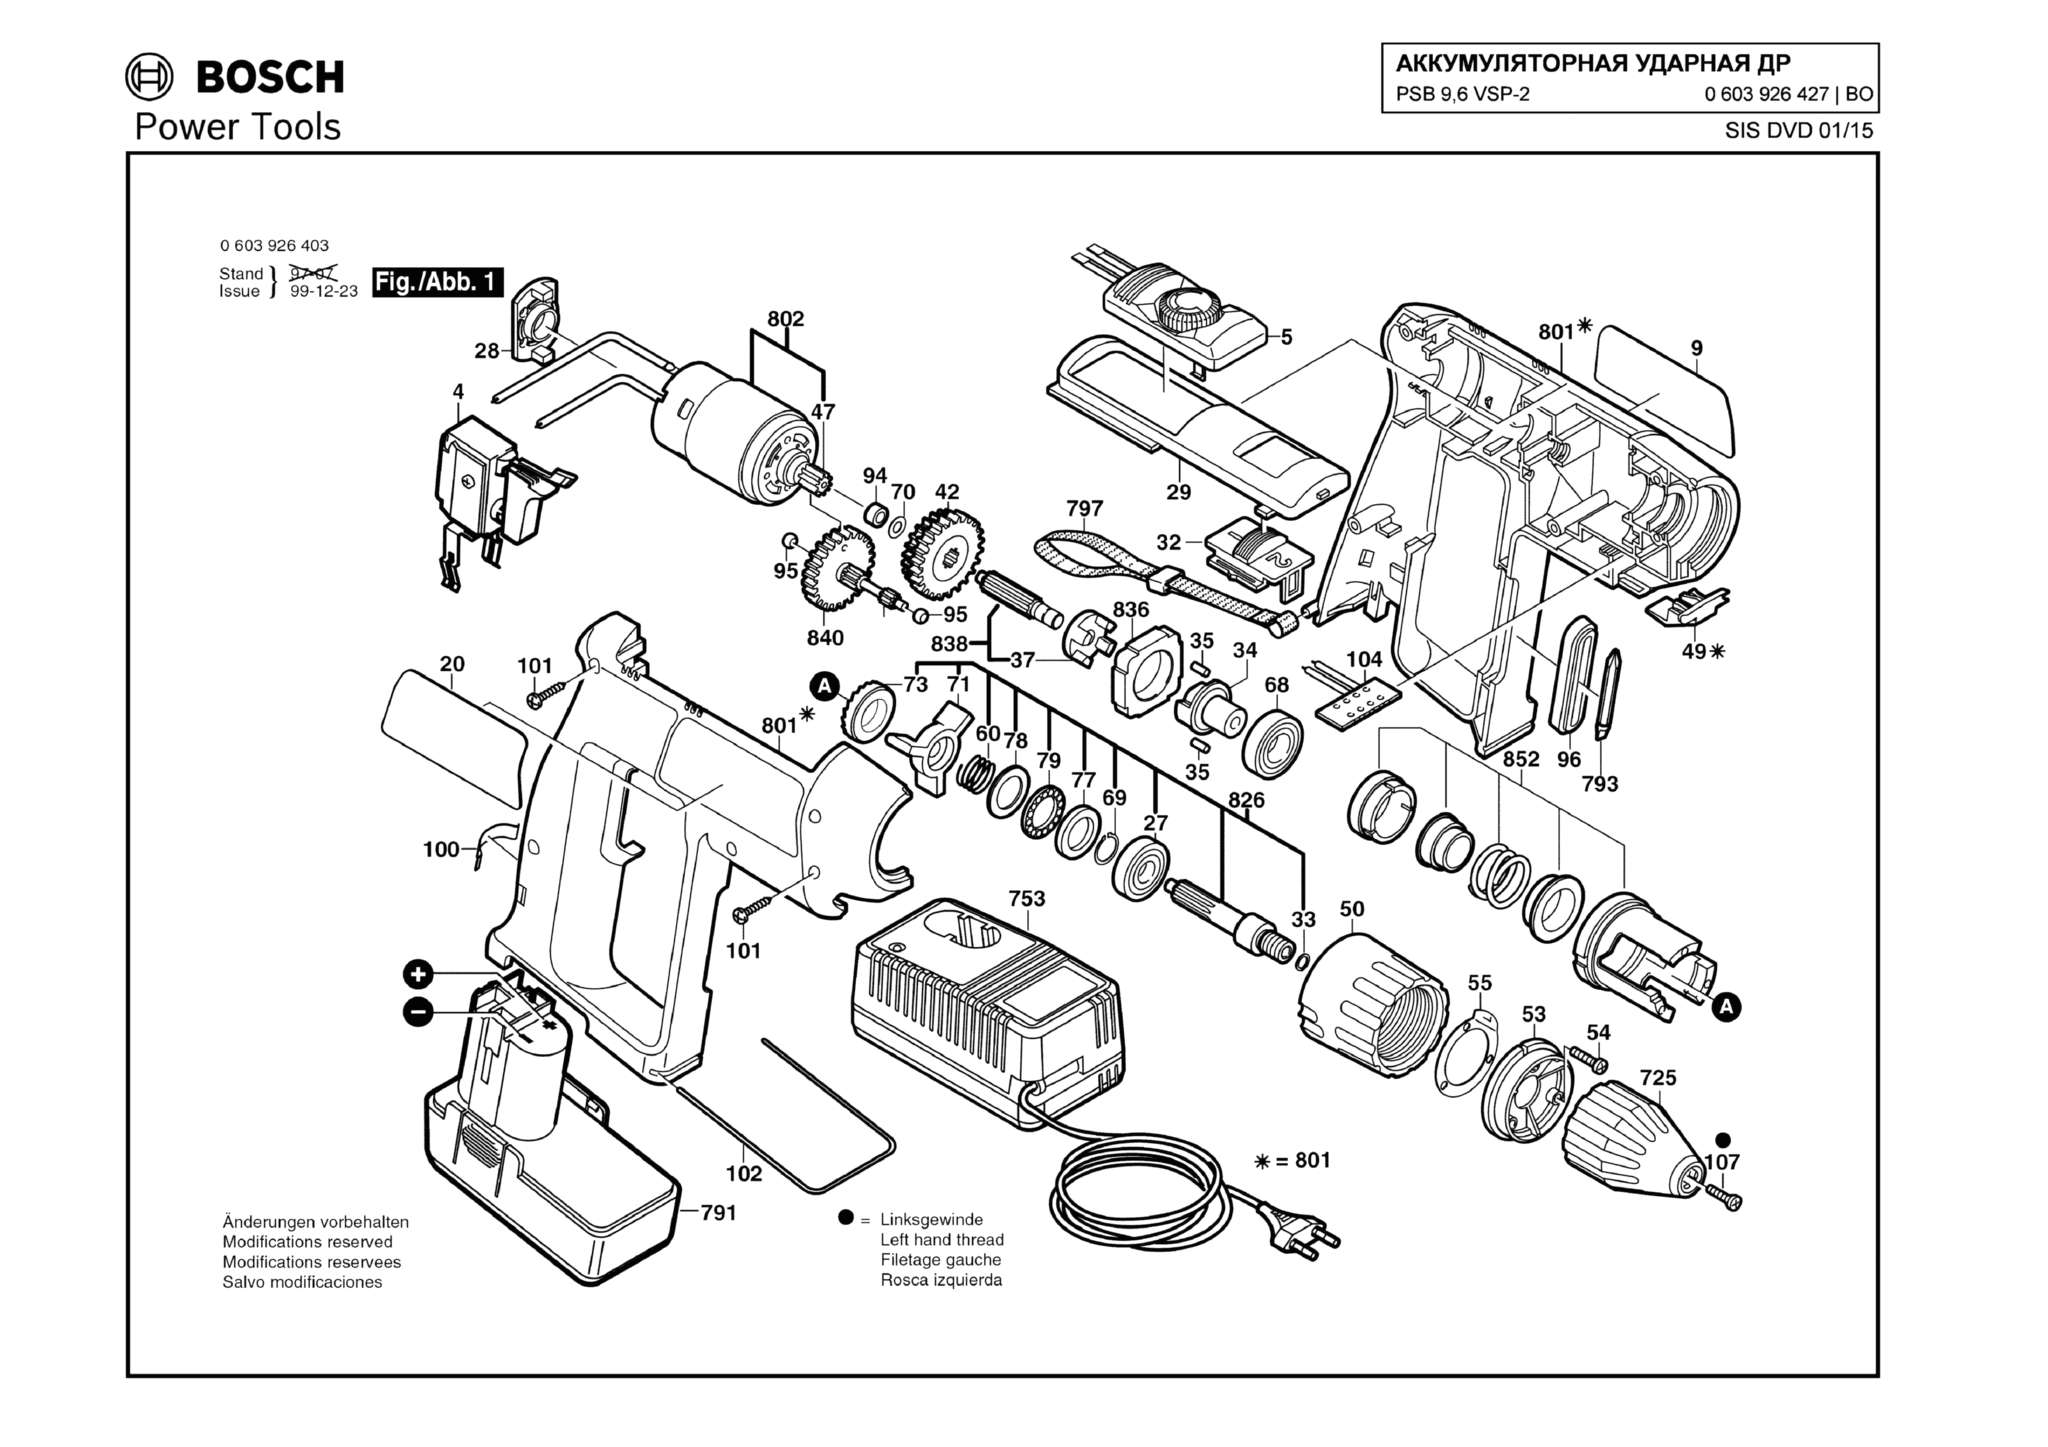 Запчасти, схема и деталировка Bosch PSB 9,6 VSP-2 (ТИП 0603926427)